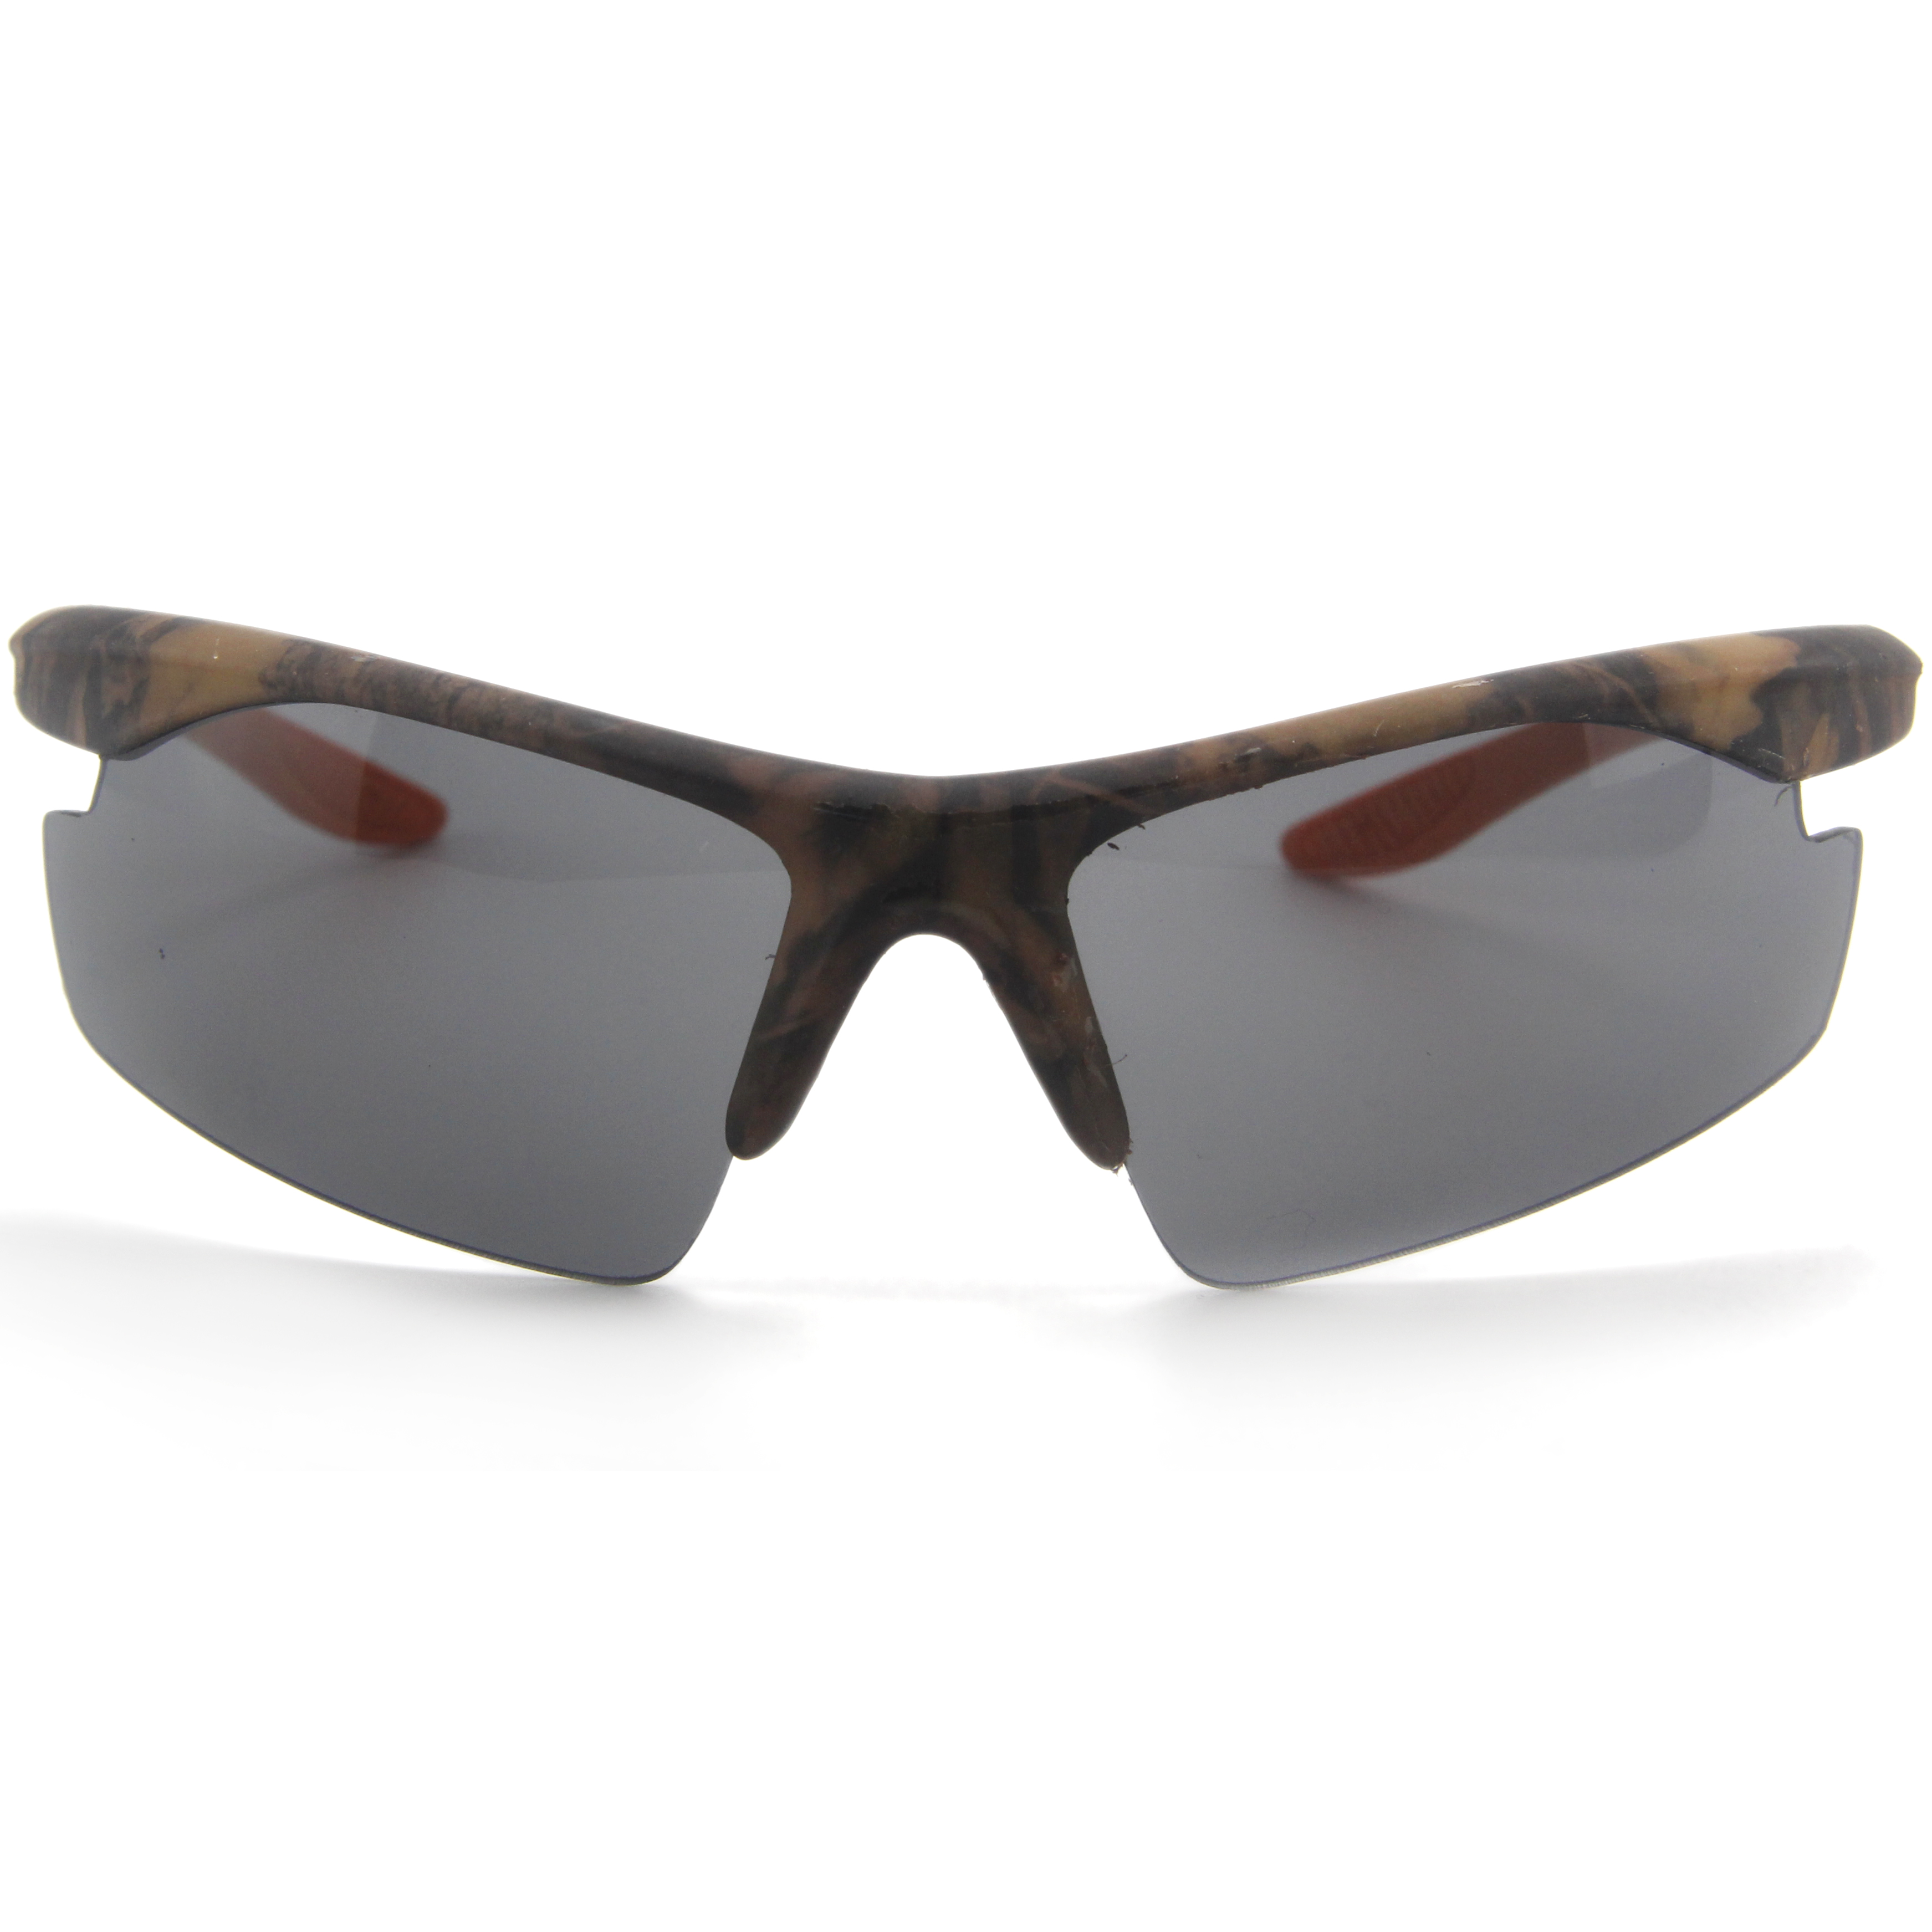 Eugenia 2020 gafas de ciclismo caliente mejor UV400 polarizado marco negro deporte gafas de sol